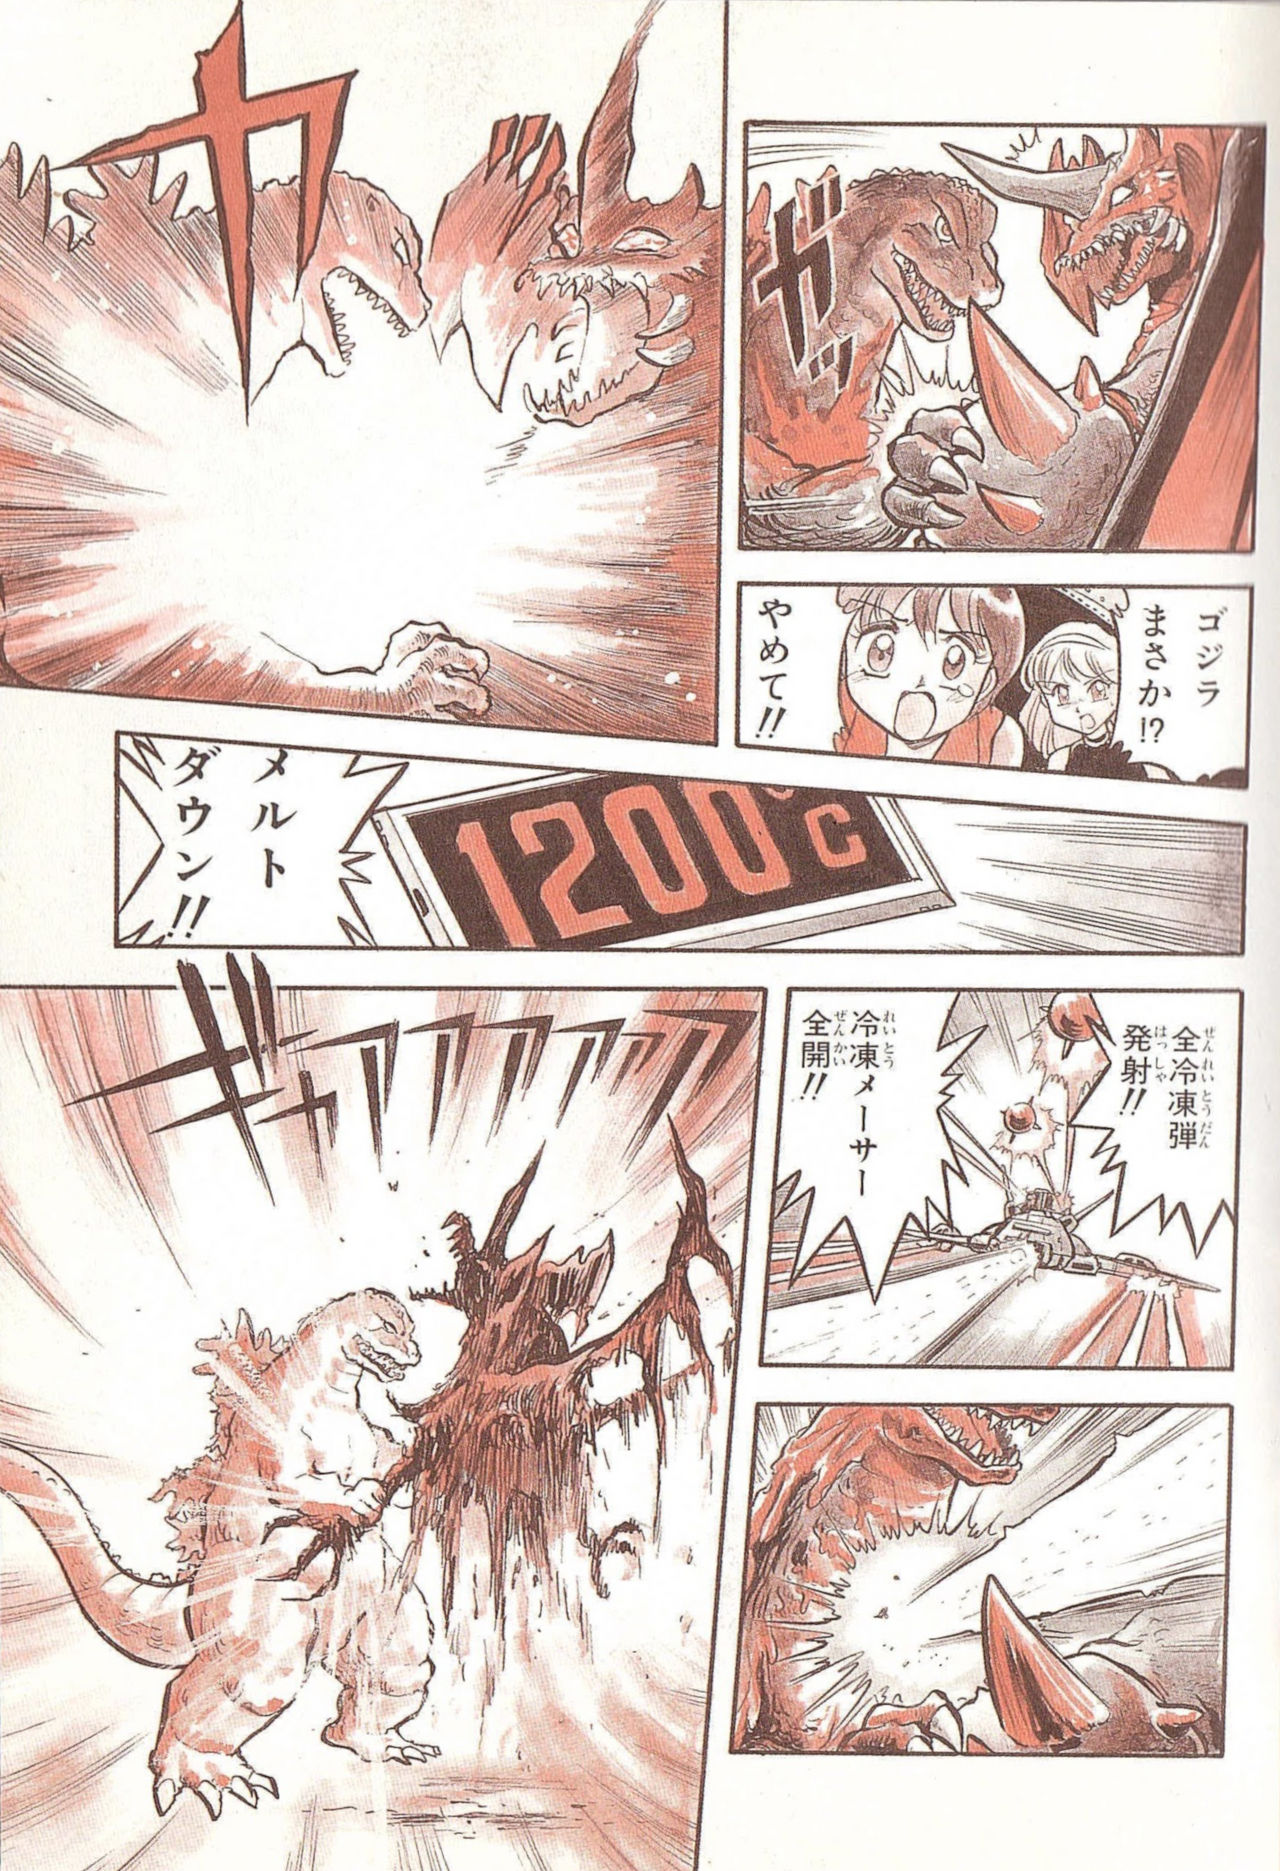 Ao Ashi chapter168 page 13 manga coloring by ZeroSwim on DeviantArt